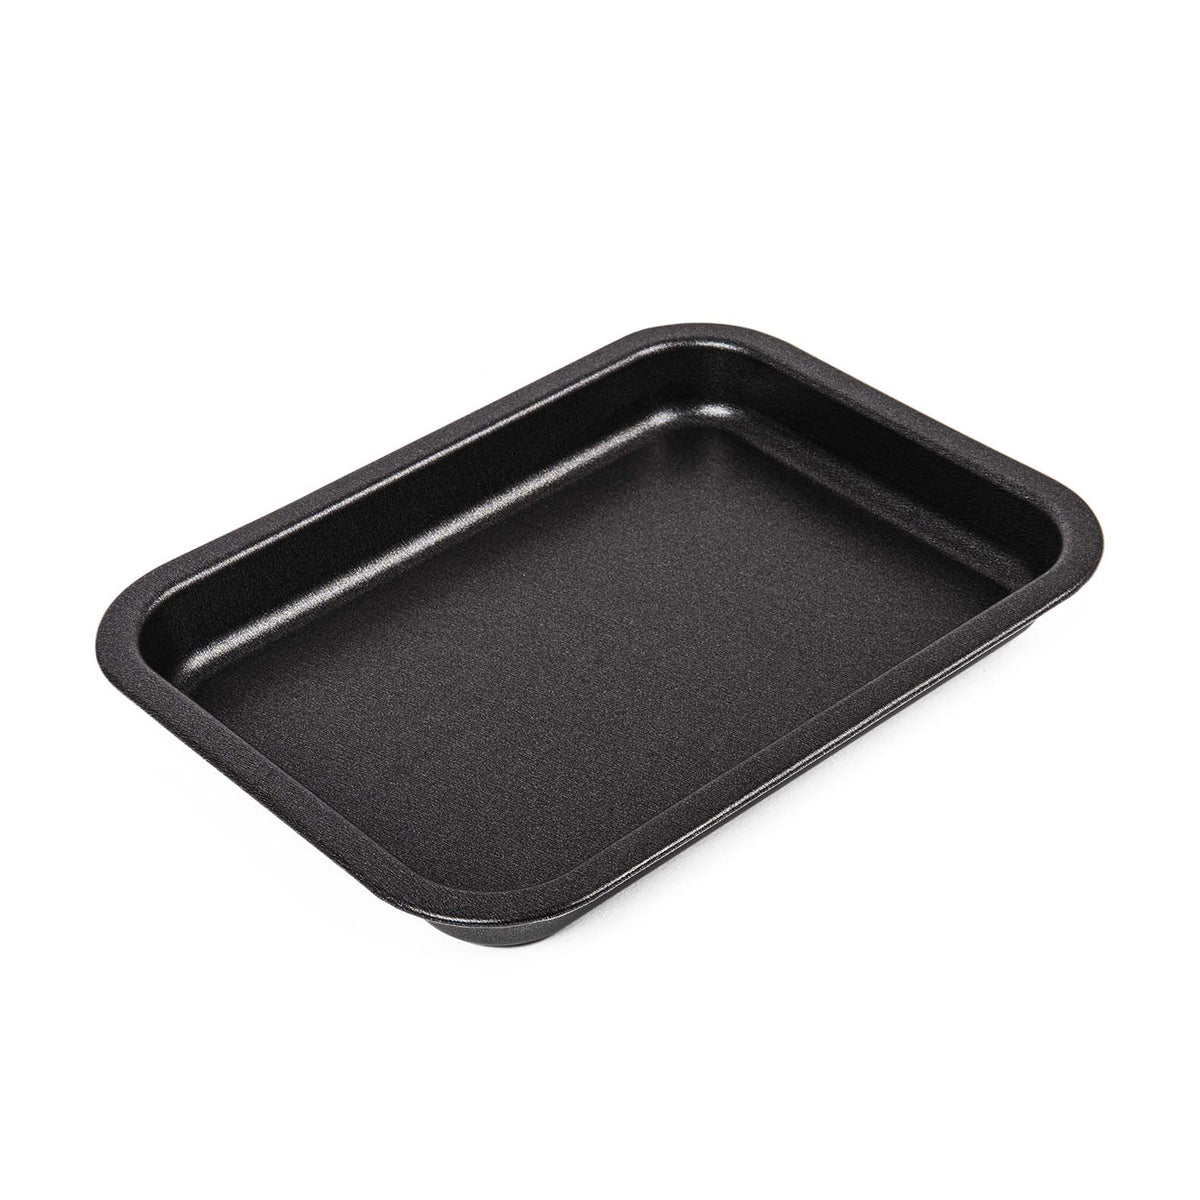 Rettangular non -stick baking tray - 30x22 cm, h3 cm